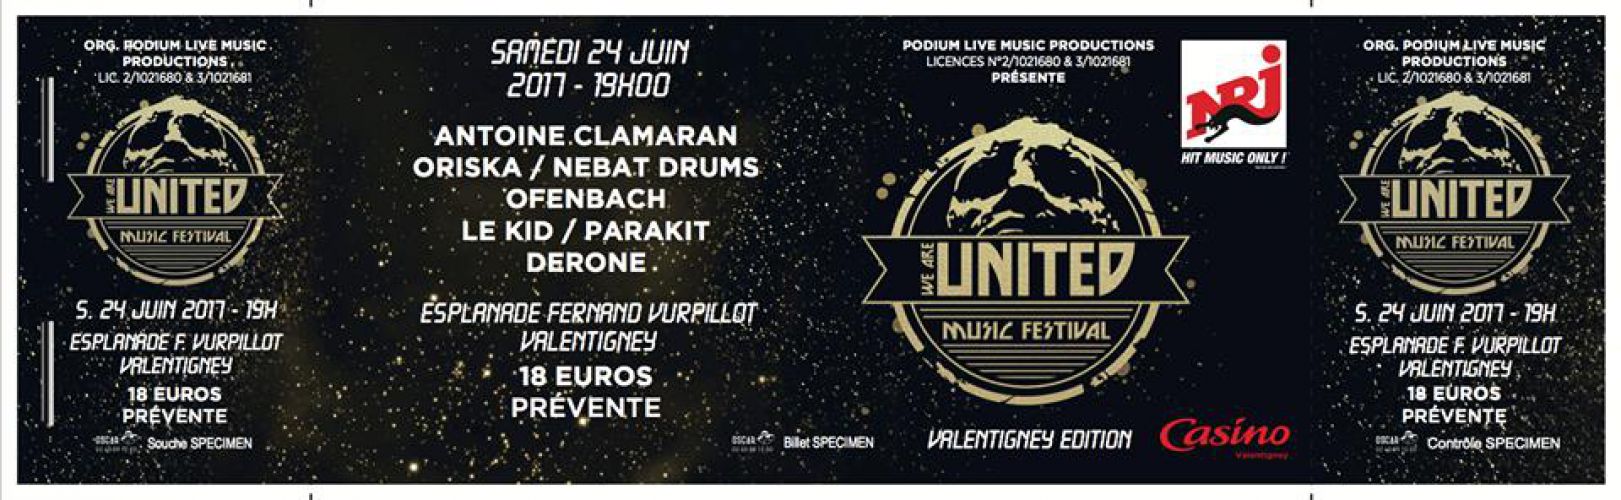 United Music Festival – Valentigney Edition